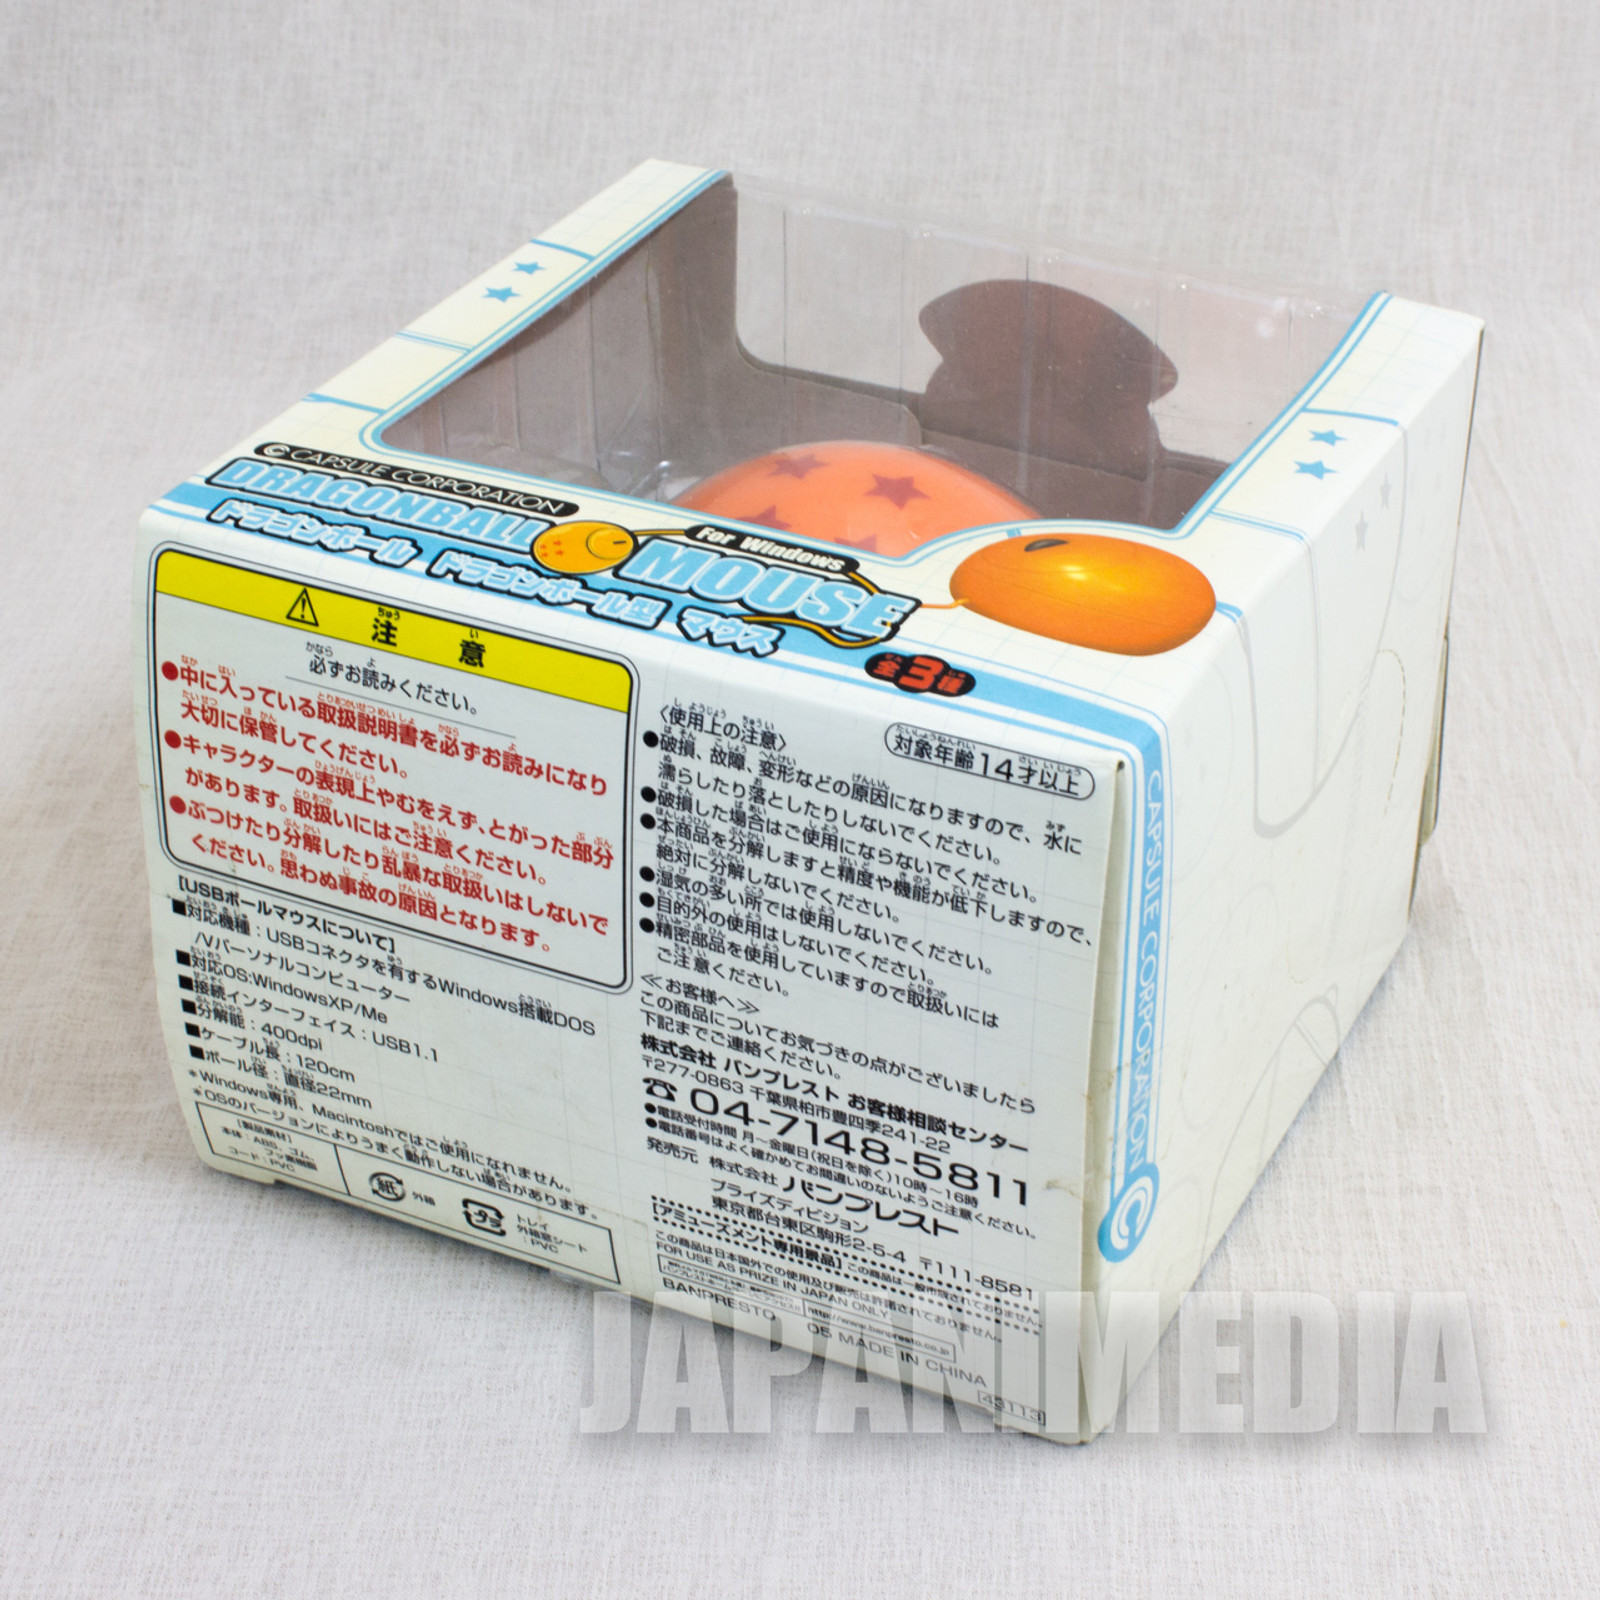 Dragon Ball Four-star ball USB Mouse (PC Accessory) Banpresto JAPAN